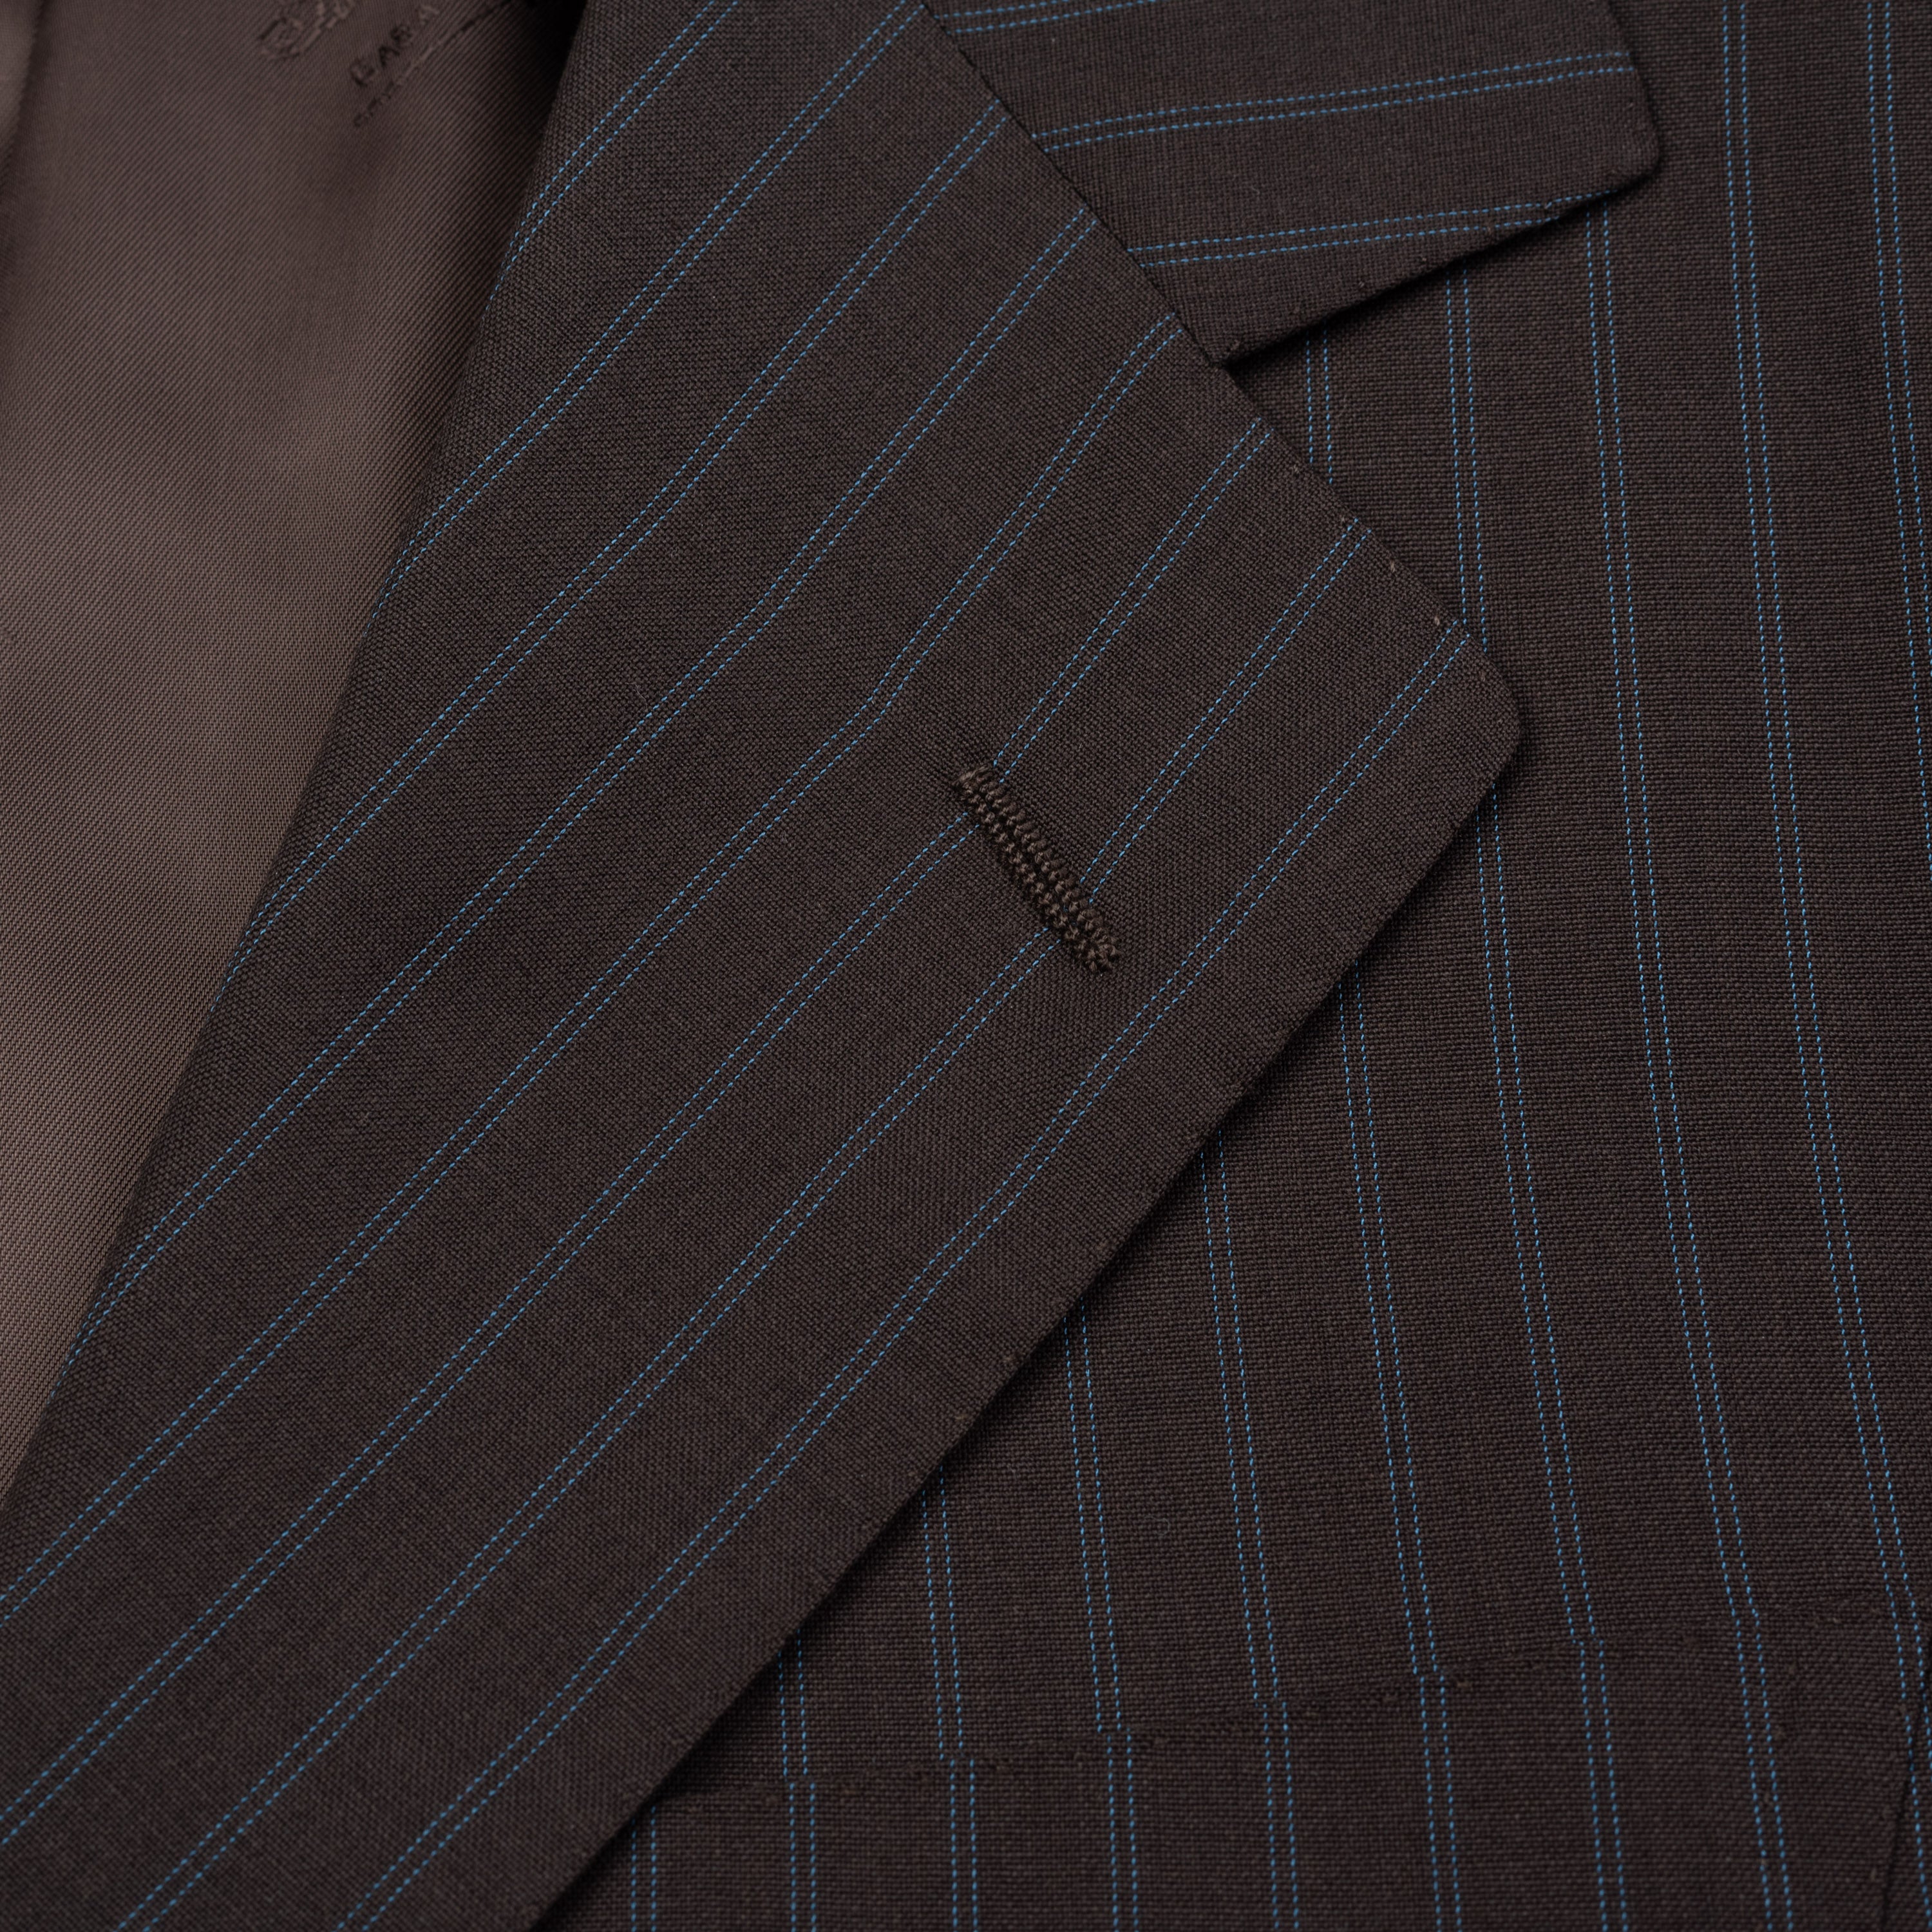 SARTORIA CASTANGIA Handmade Brown Striped Wool Super 120's Suit NEW CASTANGIA